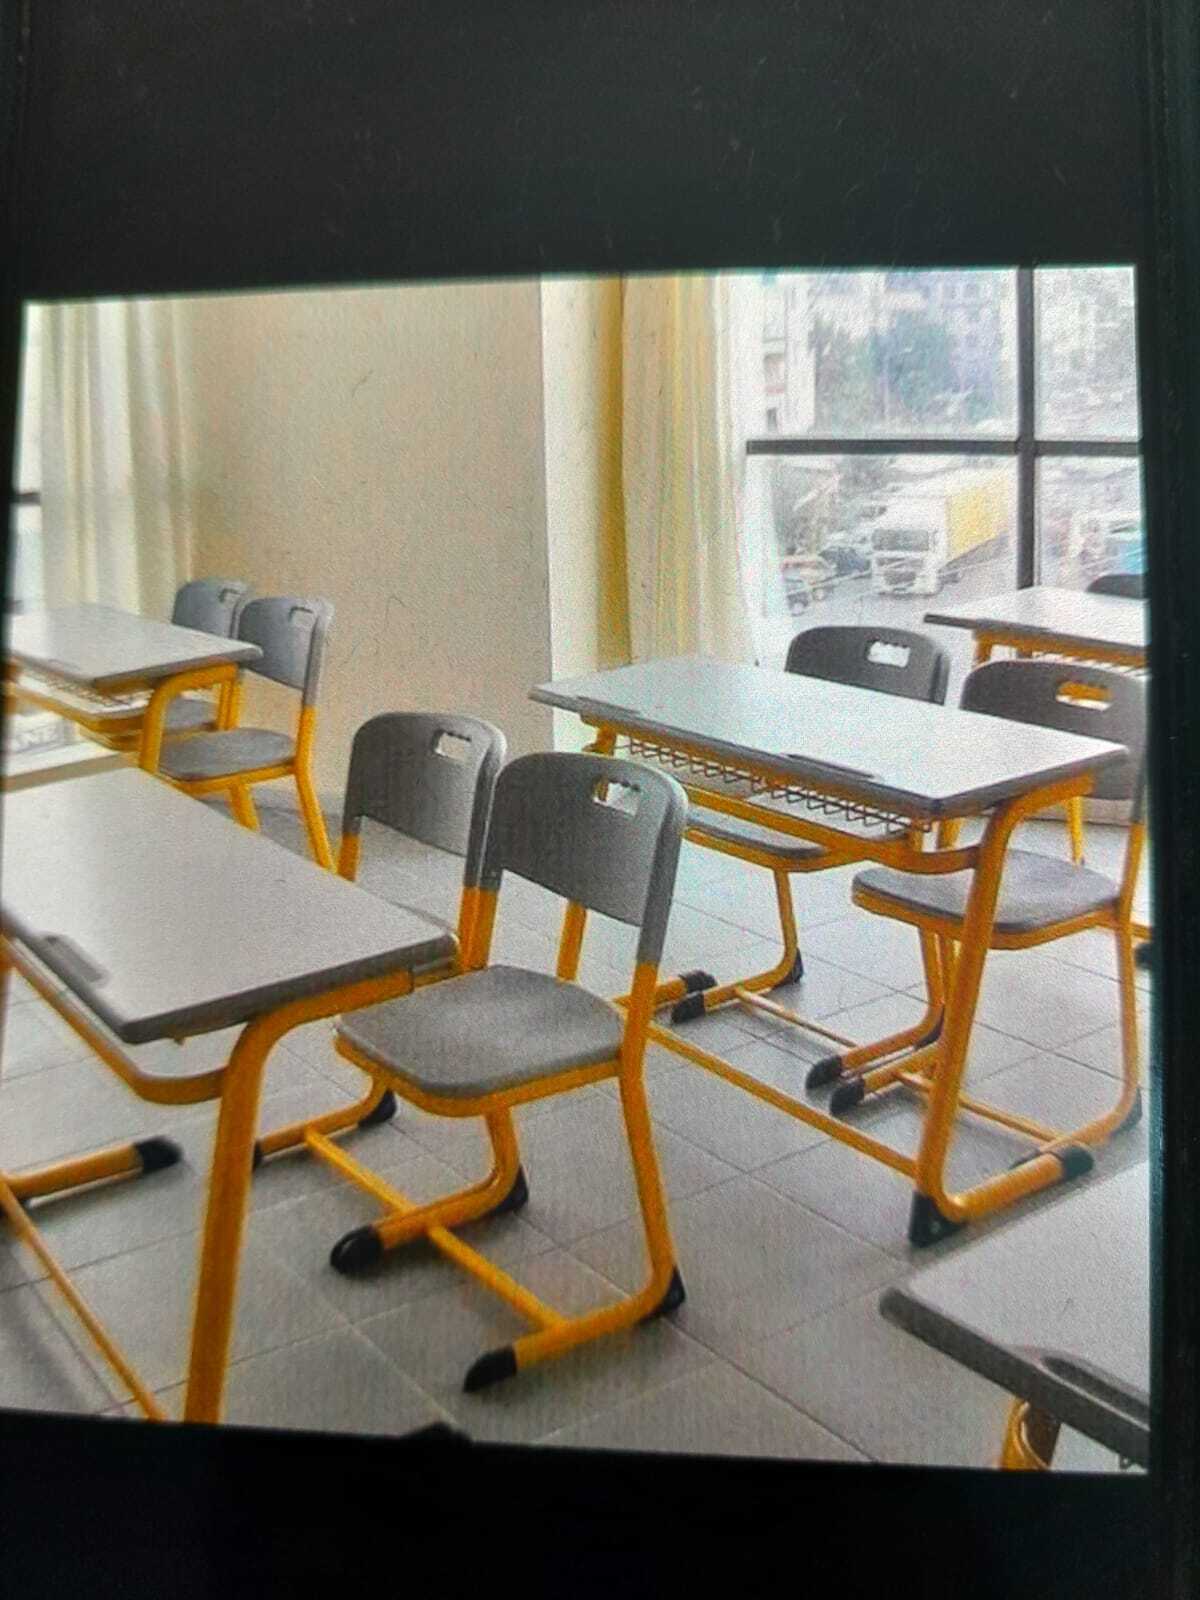 Dual student desk